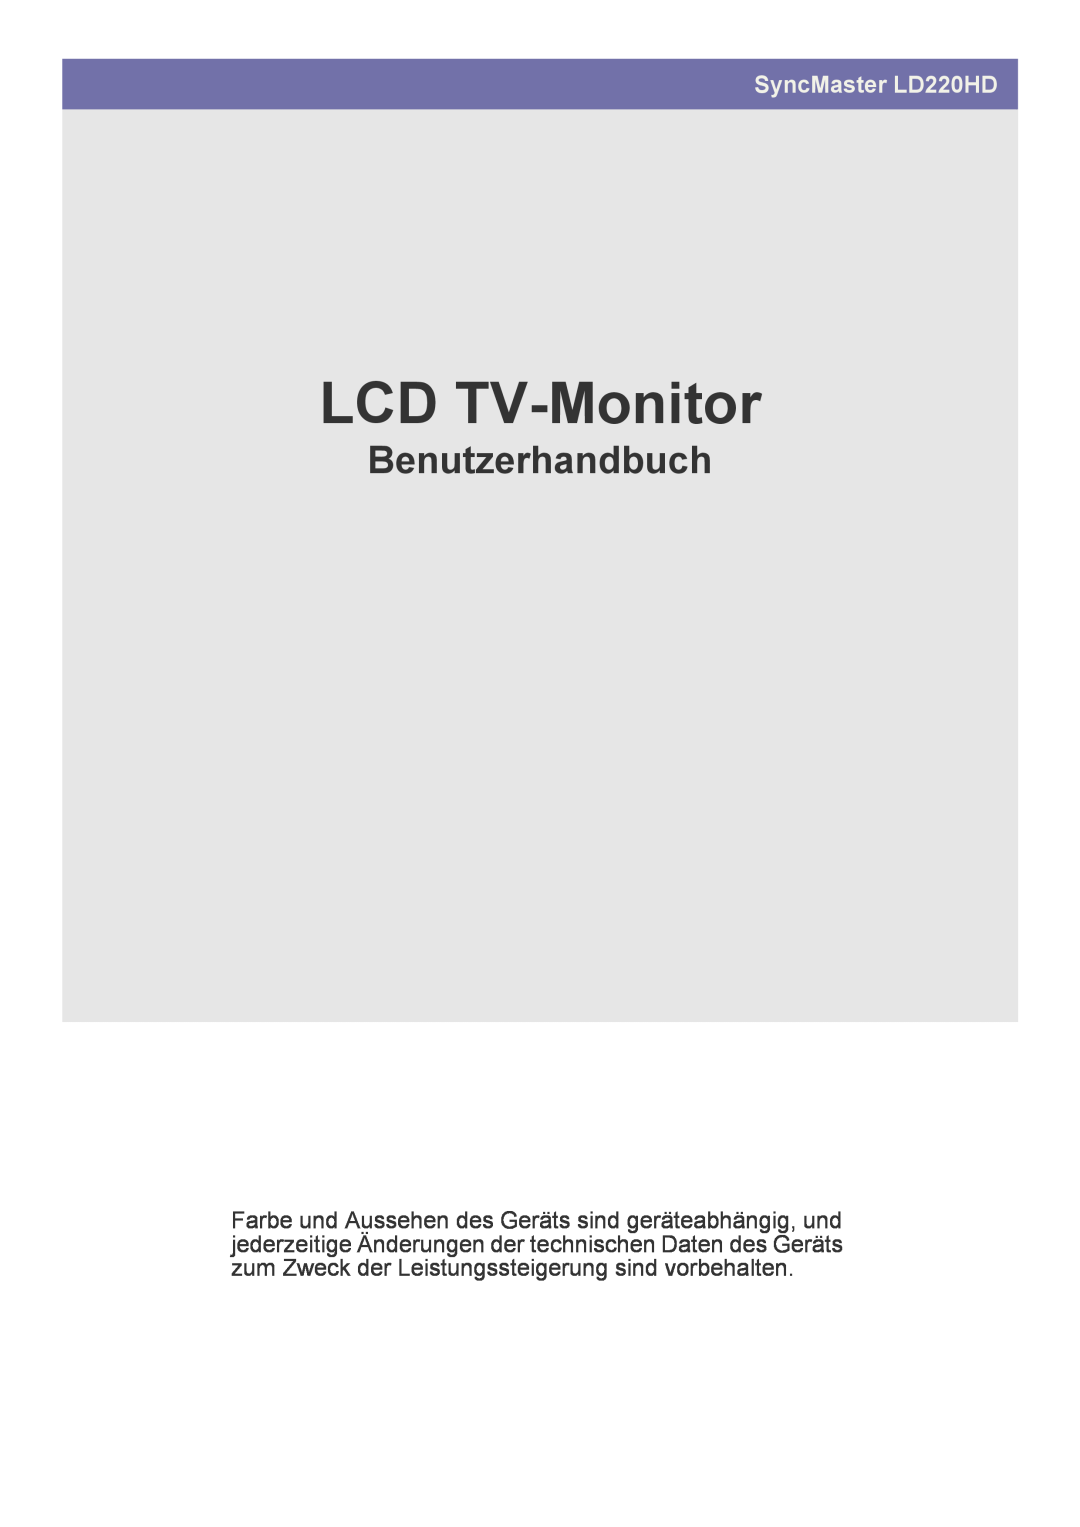 Samsung LS22FMDGF/XE, LS22FMDGF/EN manual Οθόνη LCD TV, Εγχειρίδιο χρήσης, SyncMaster LD220HD 